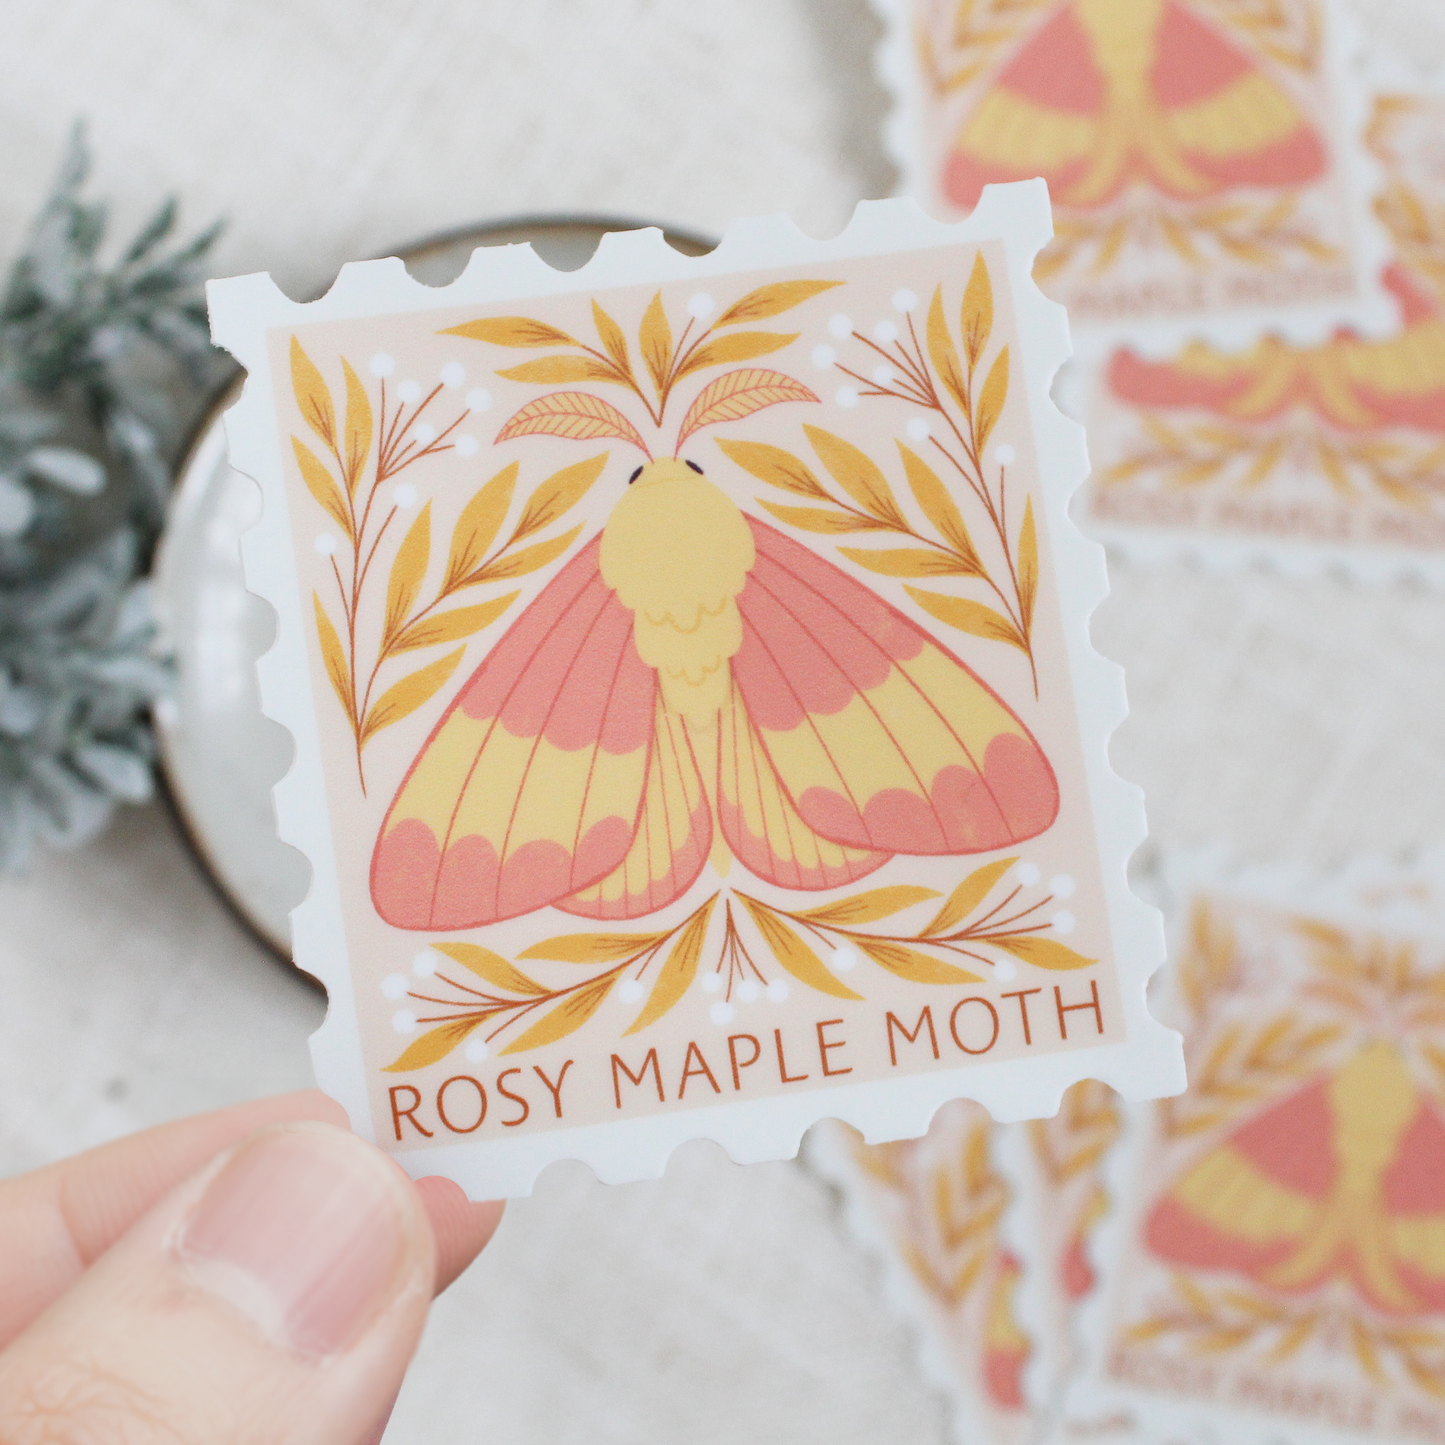 Rosy maple moth, stamp shaped vinyl sticker